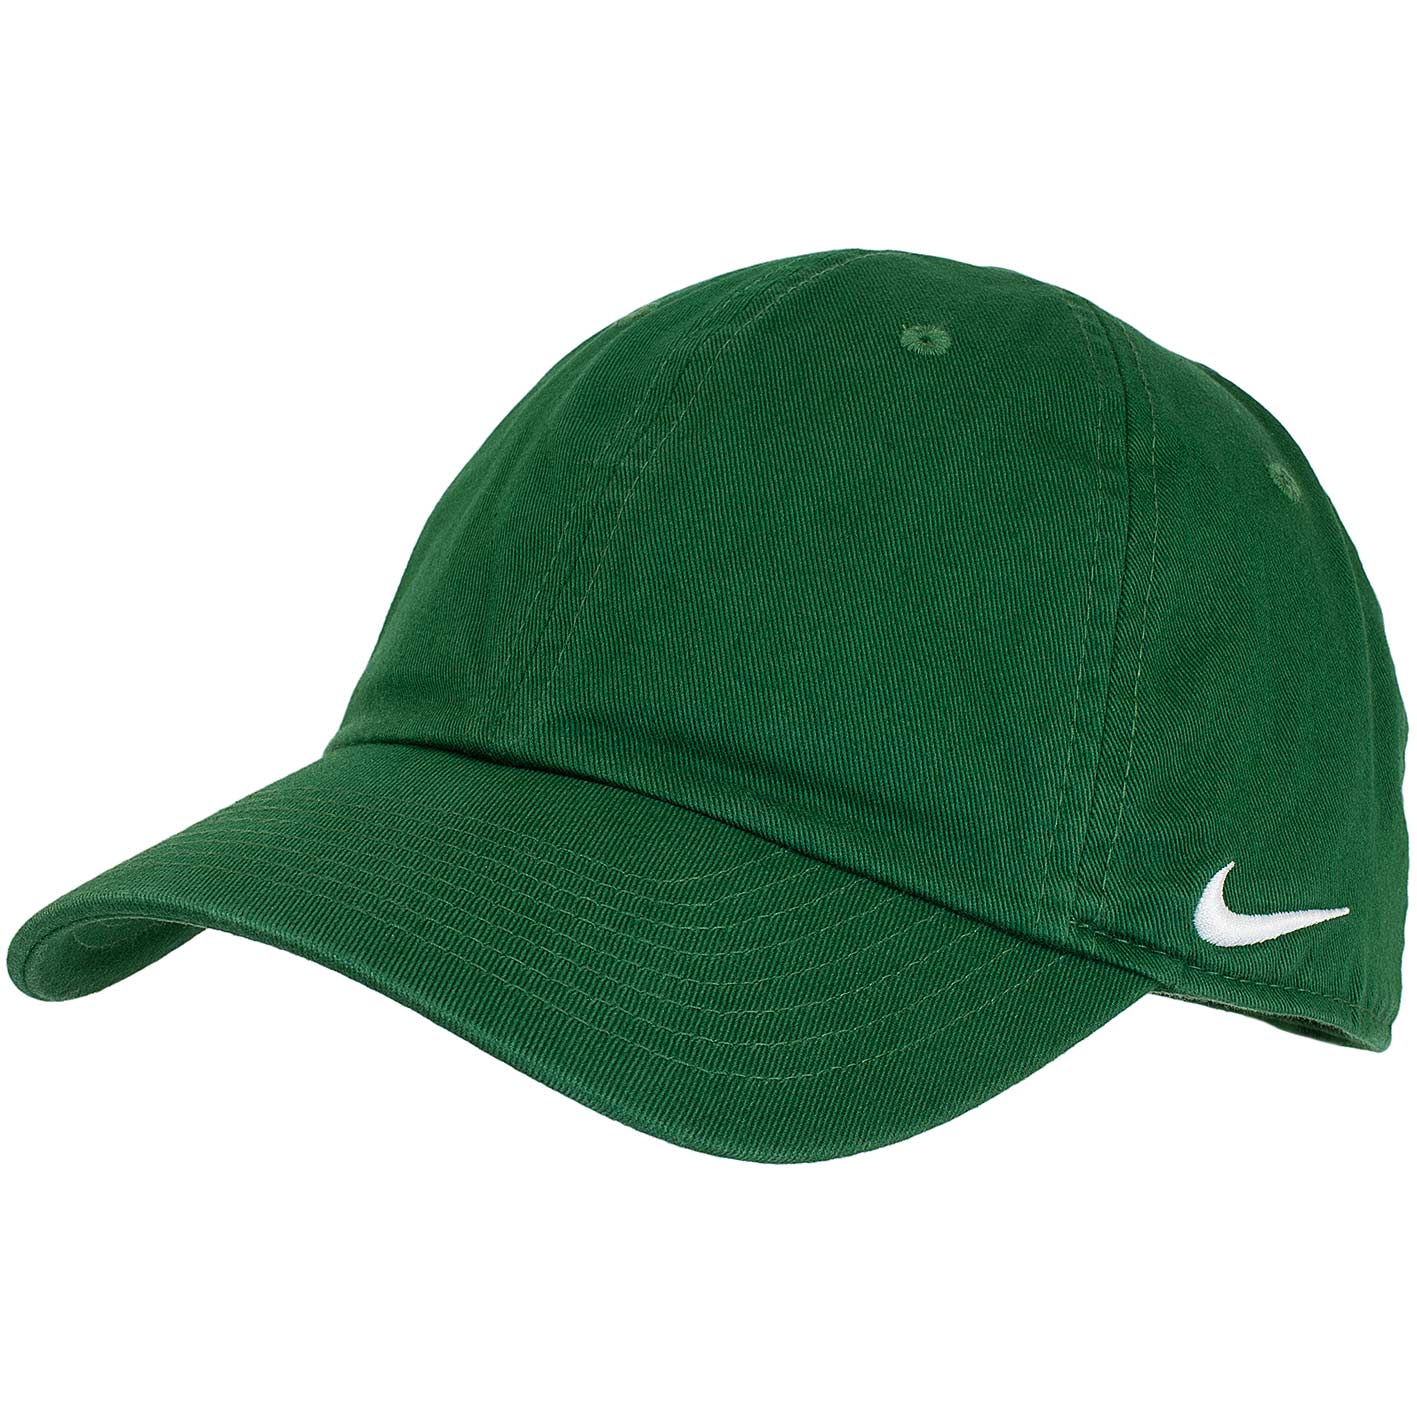 ☆ Nike Snapback Cap H86 grün/weiß - hier bestellen!